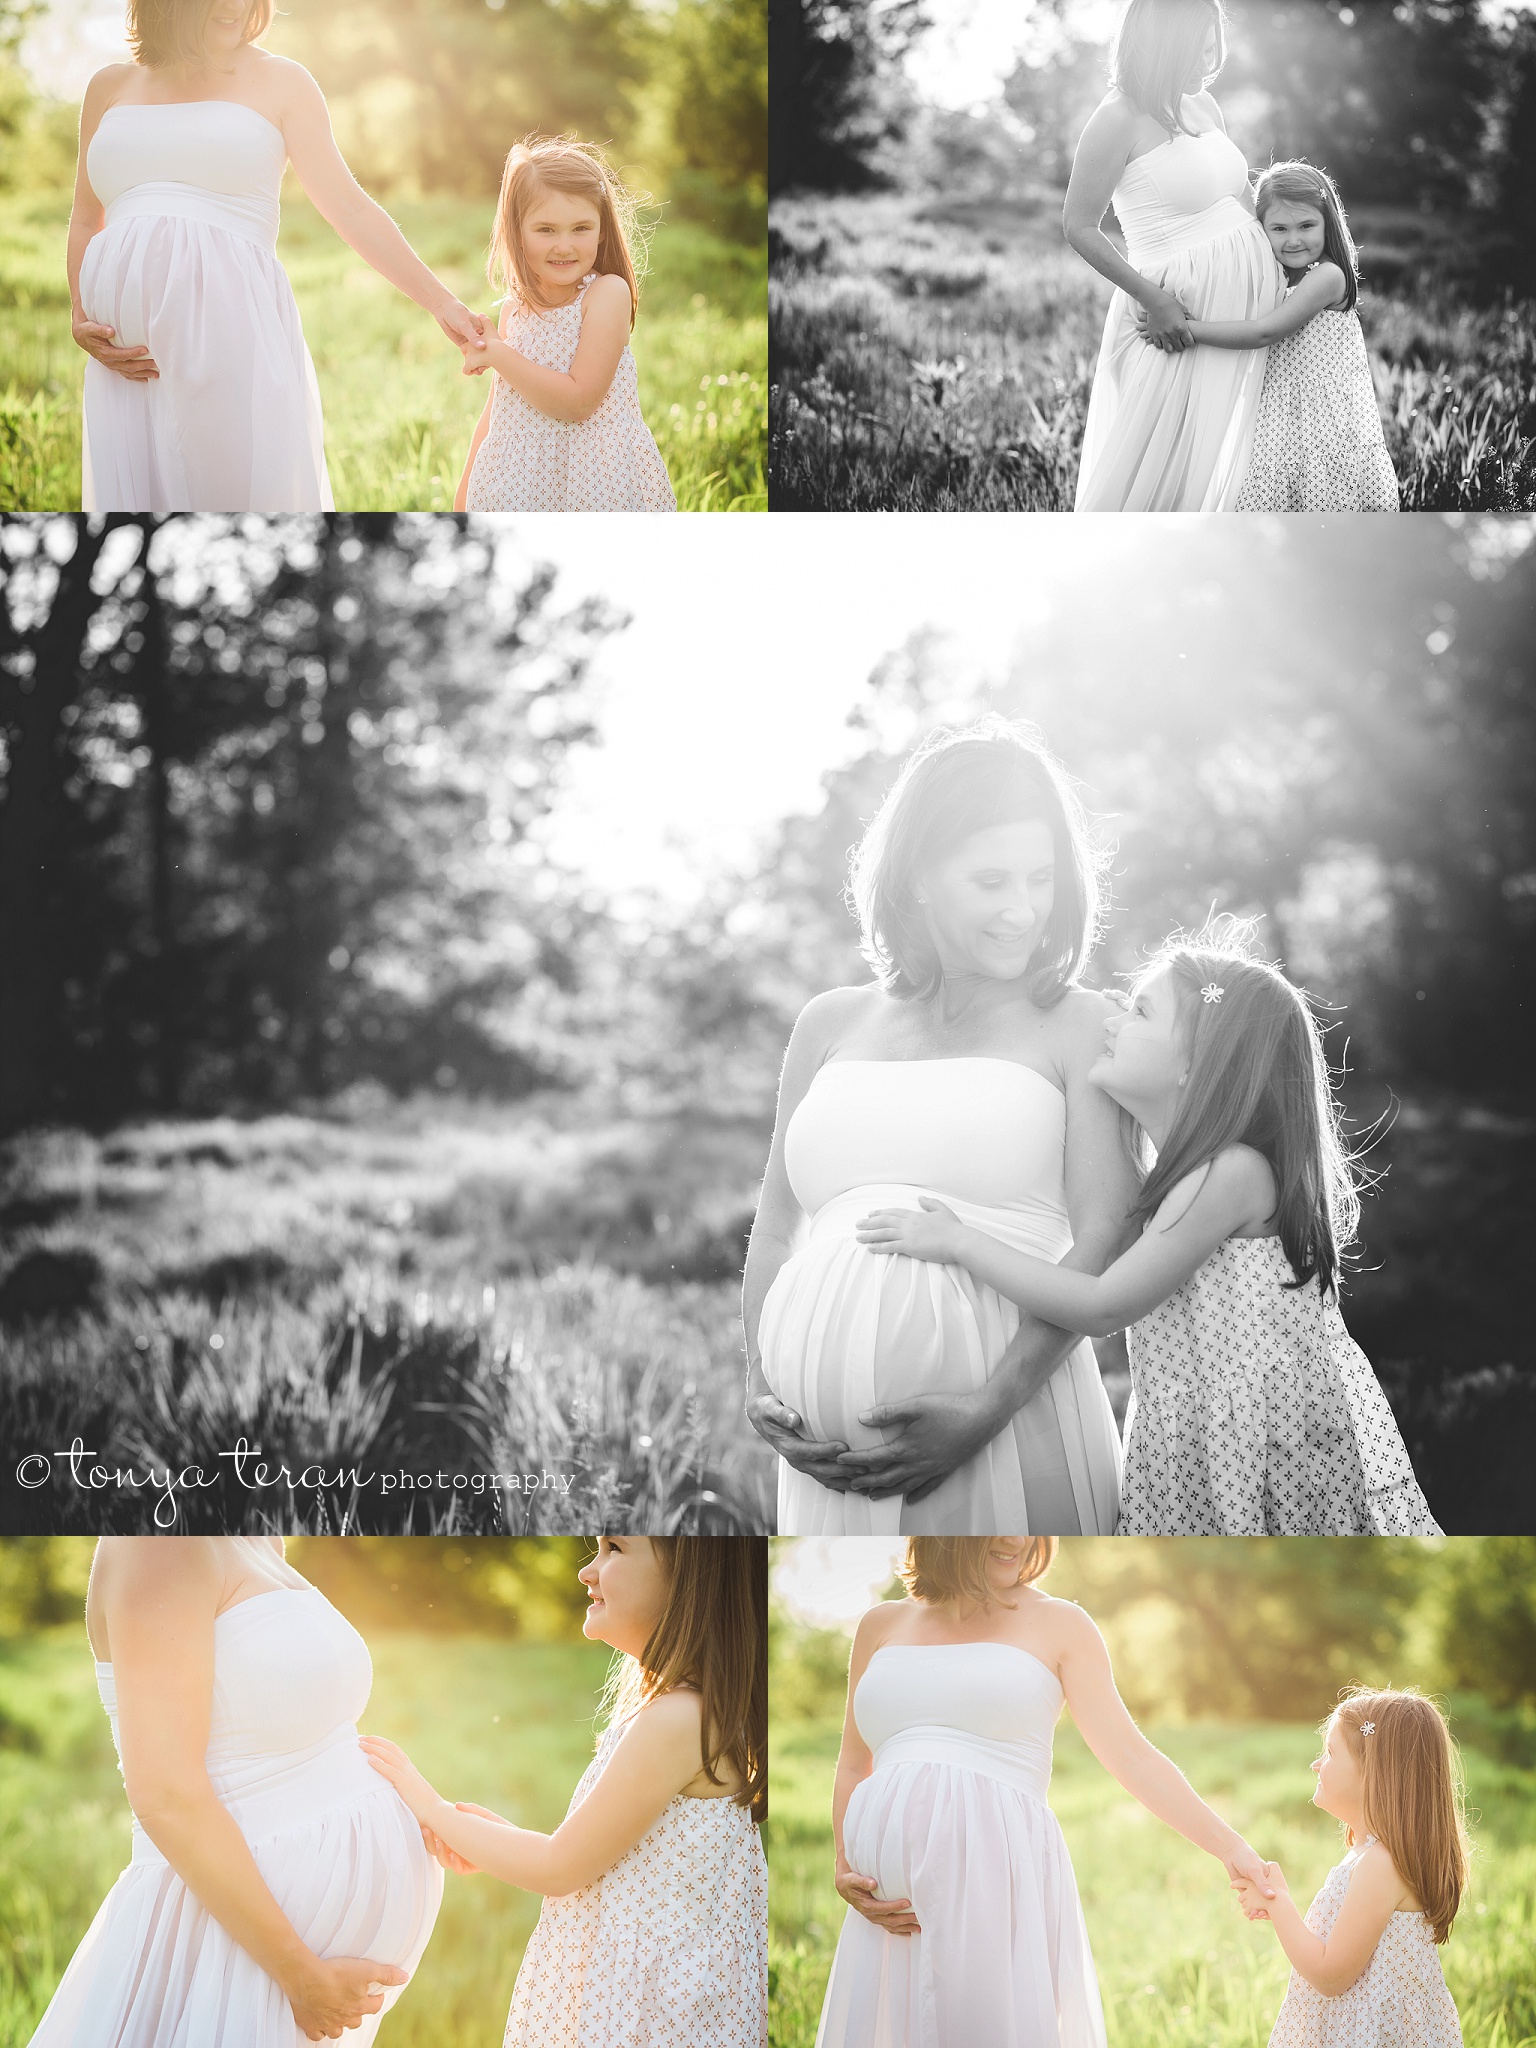 Mini Maternity Photo Session | Tonya Teran Photography, Bethesda, MD Newborn, Baby, and Family Photographer